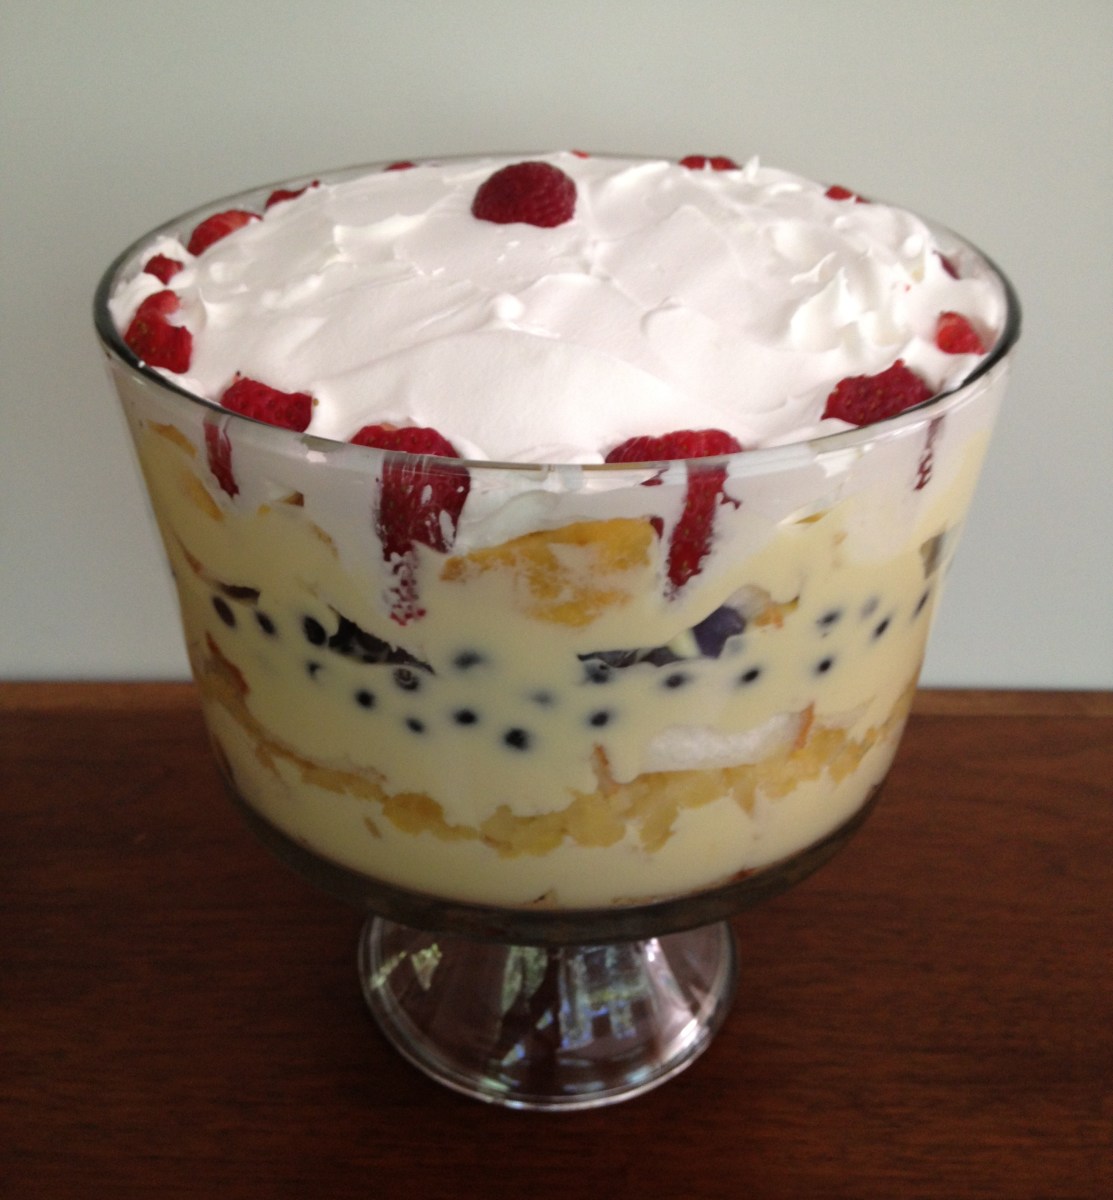 Easy Desserts: Summer Fruit Trifle Recipe